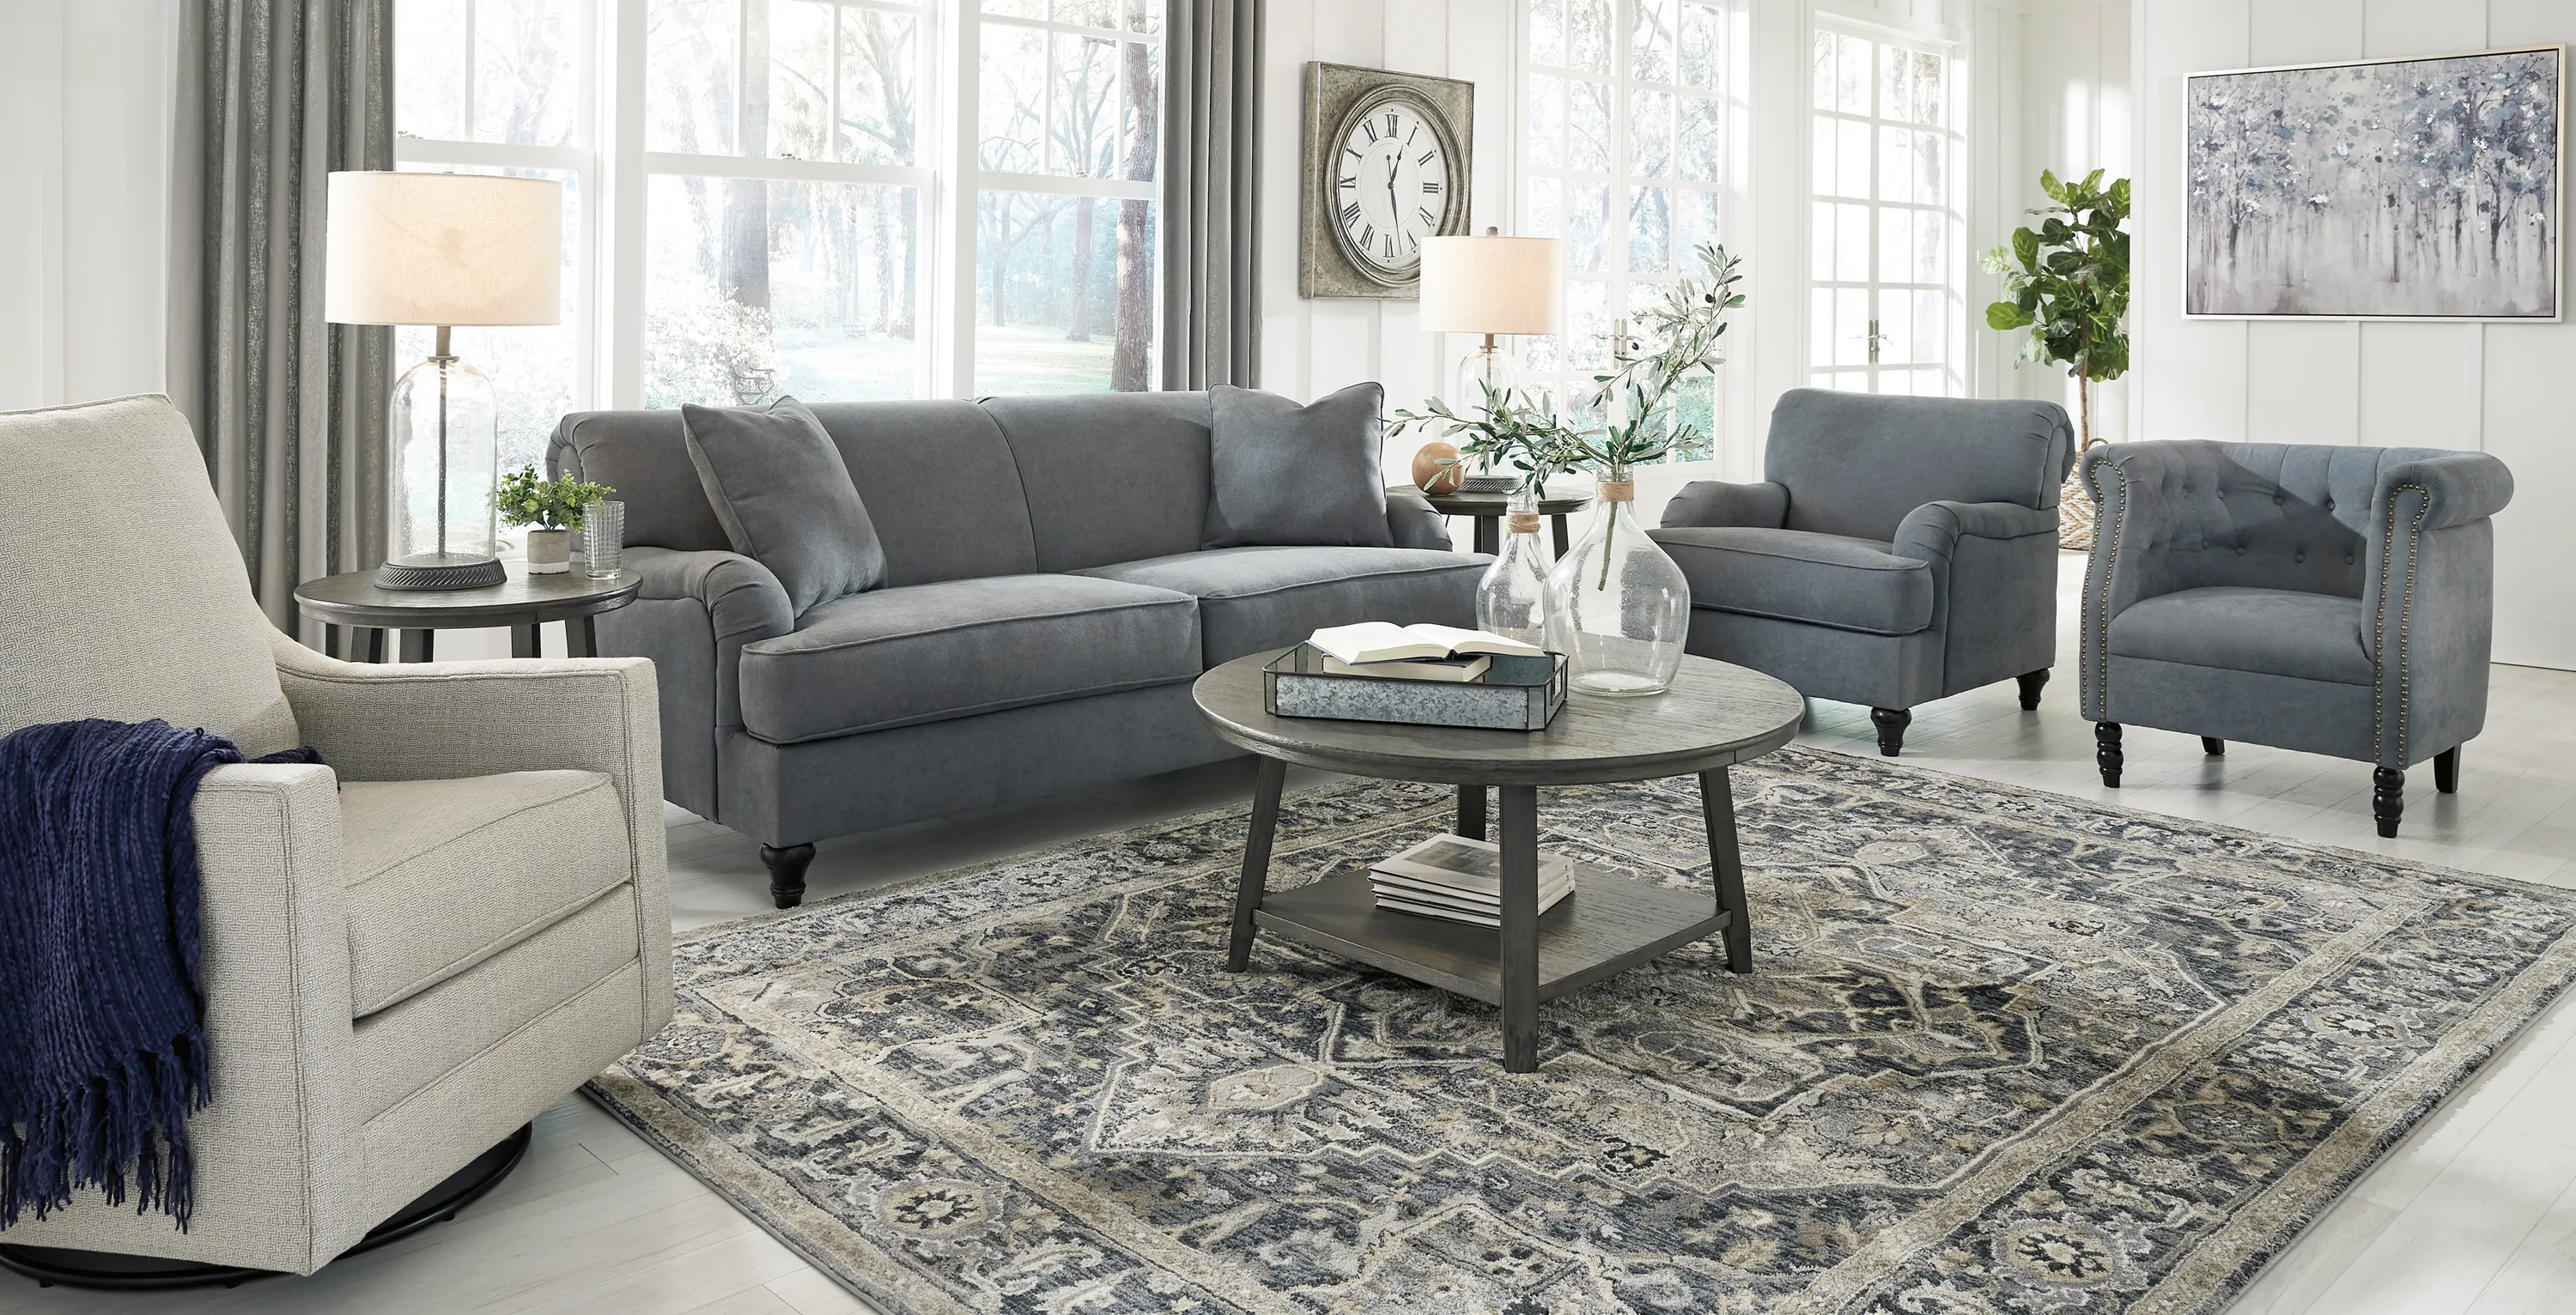 Ashley Homestore living room furniture